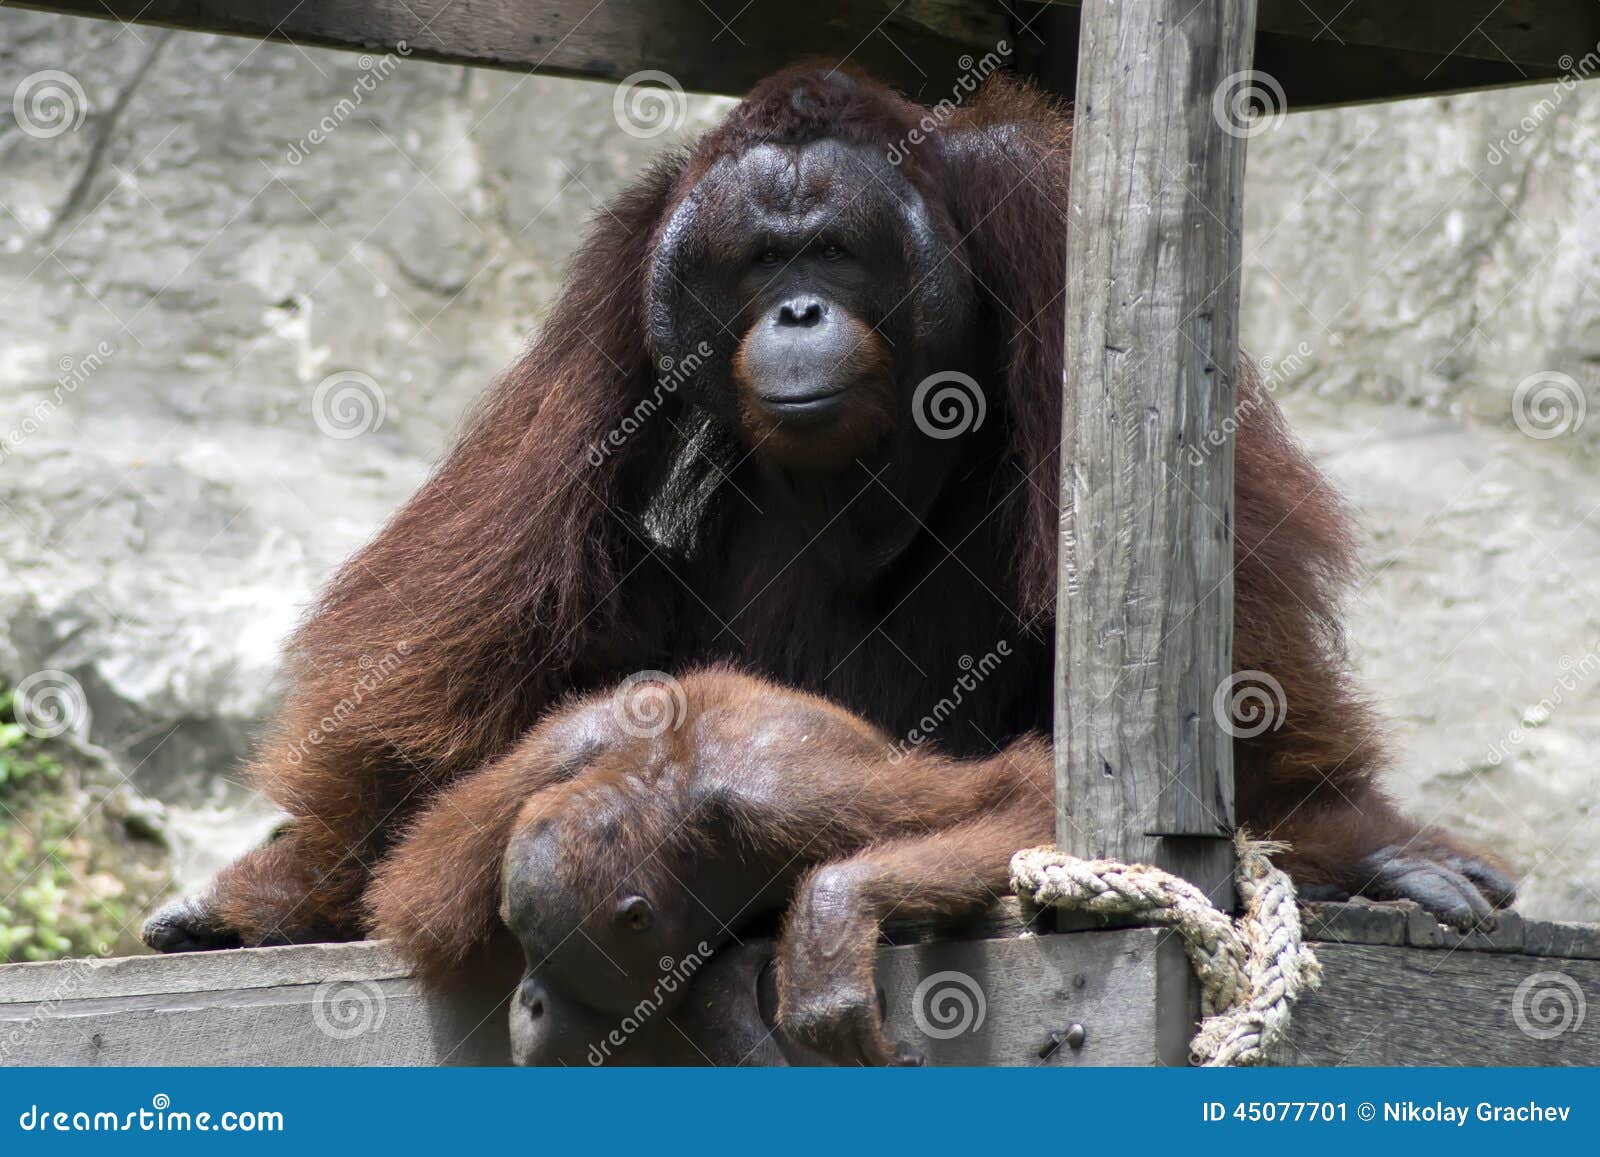 Bornean Orangutan Reproduction  Stock Image Image of 